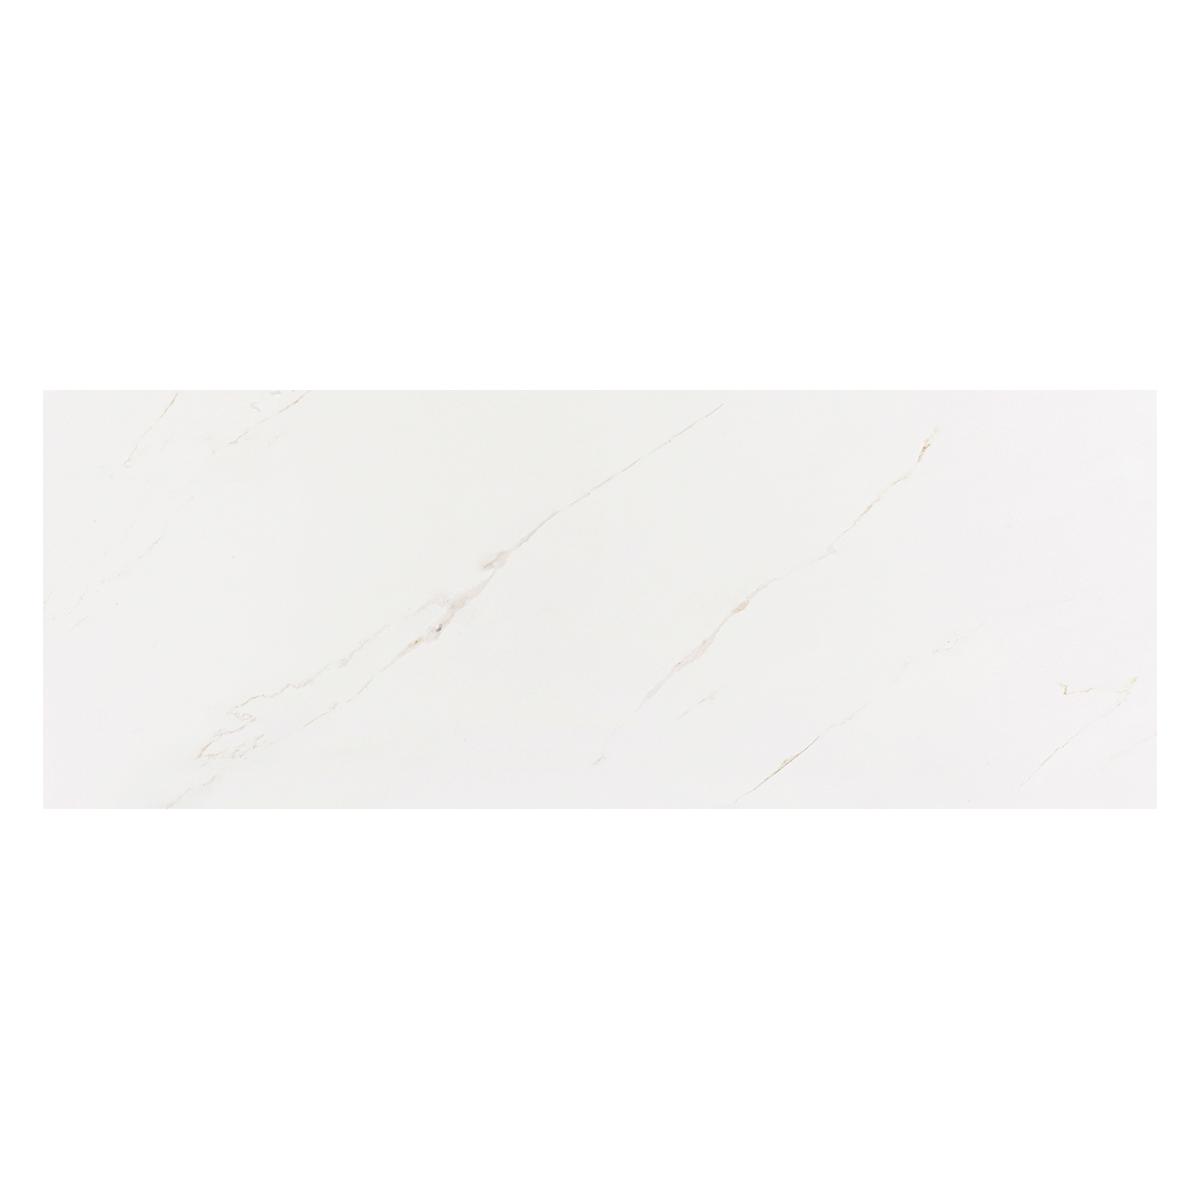 Mayólica Thassos Blanco Brillante - 45X120 cm - 1.62 m2